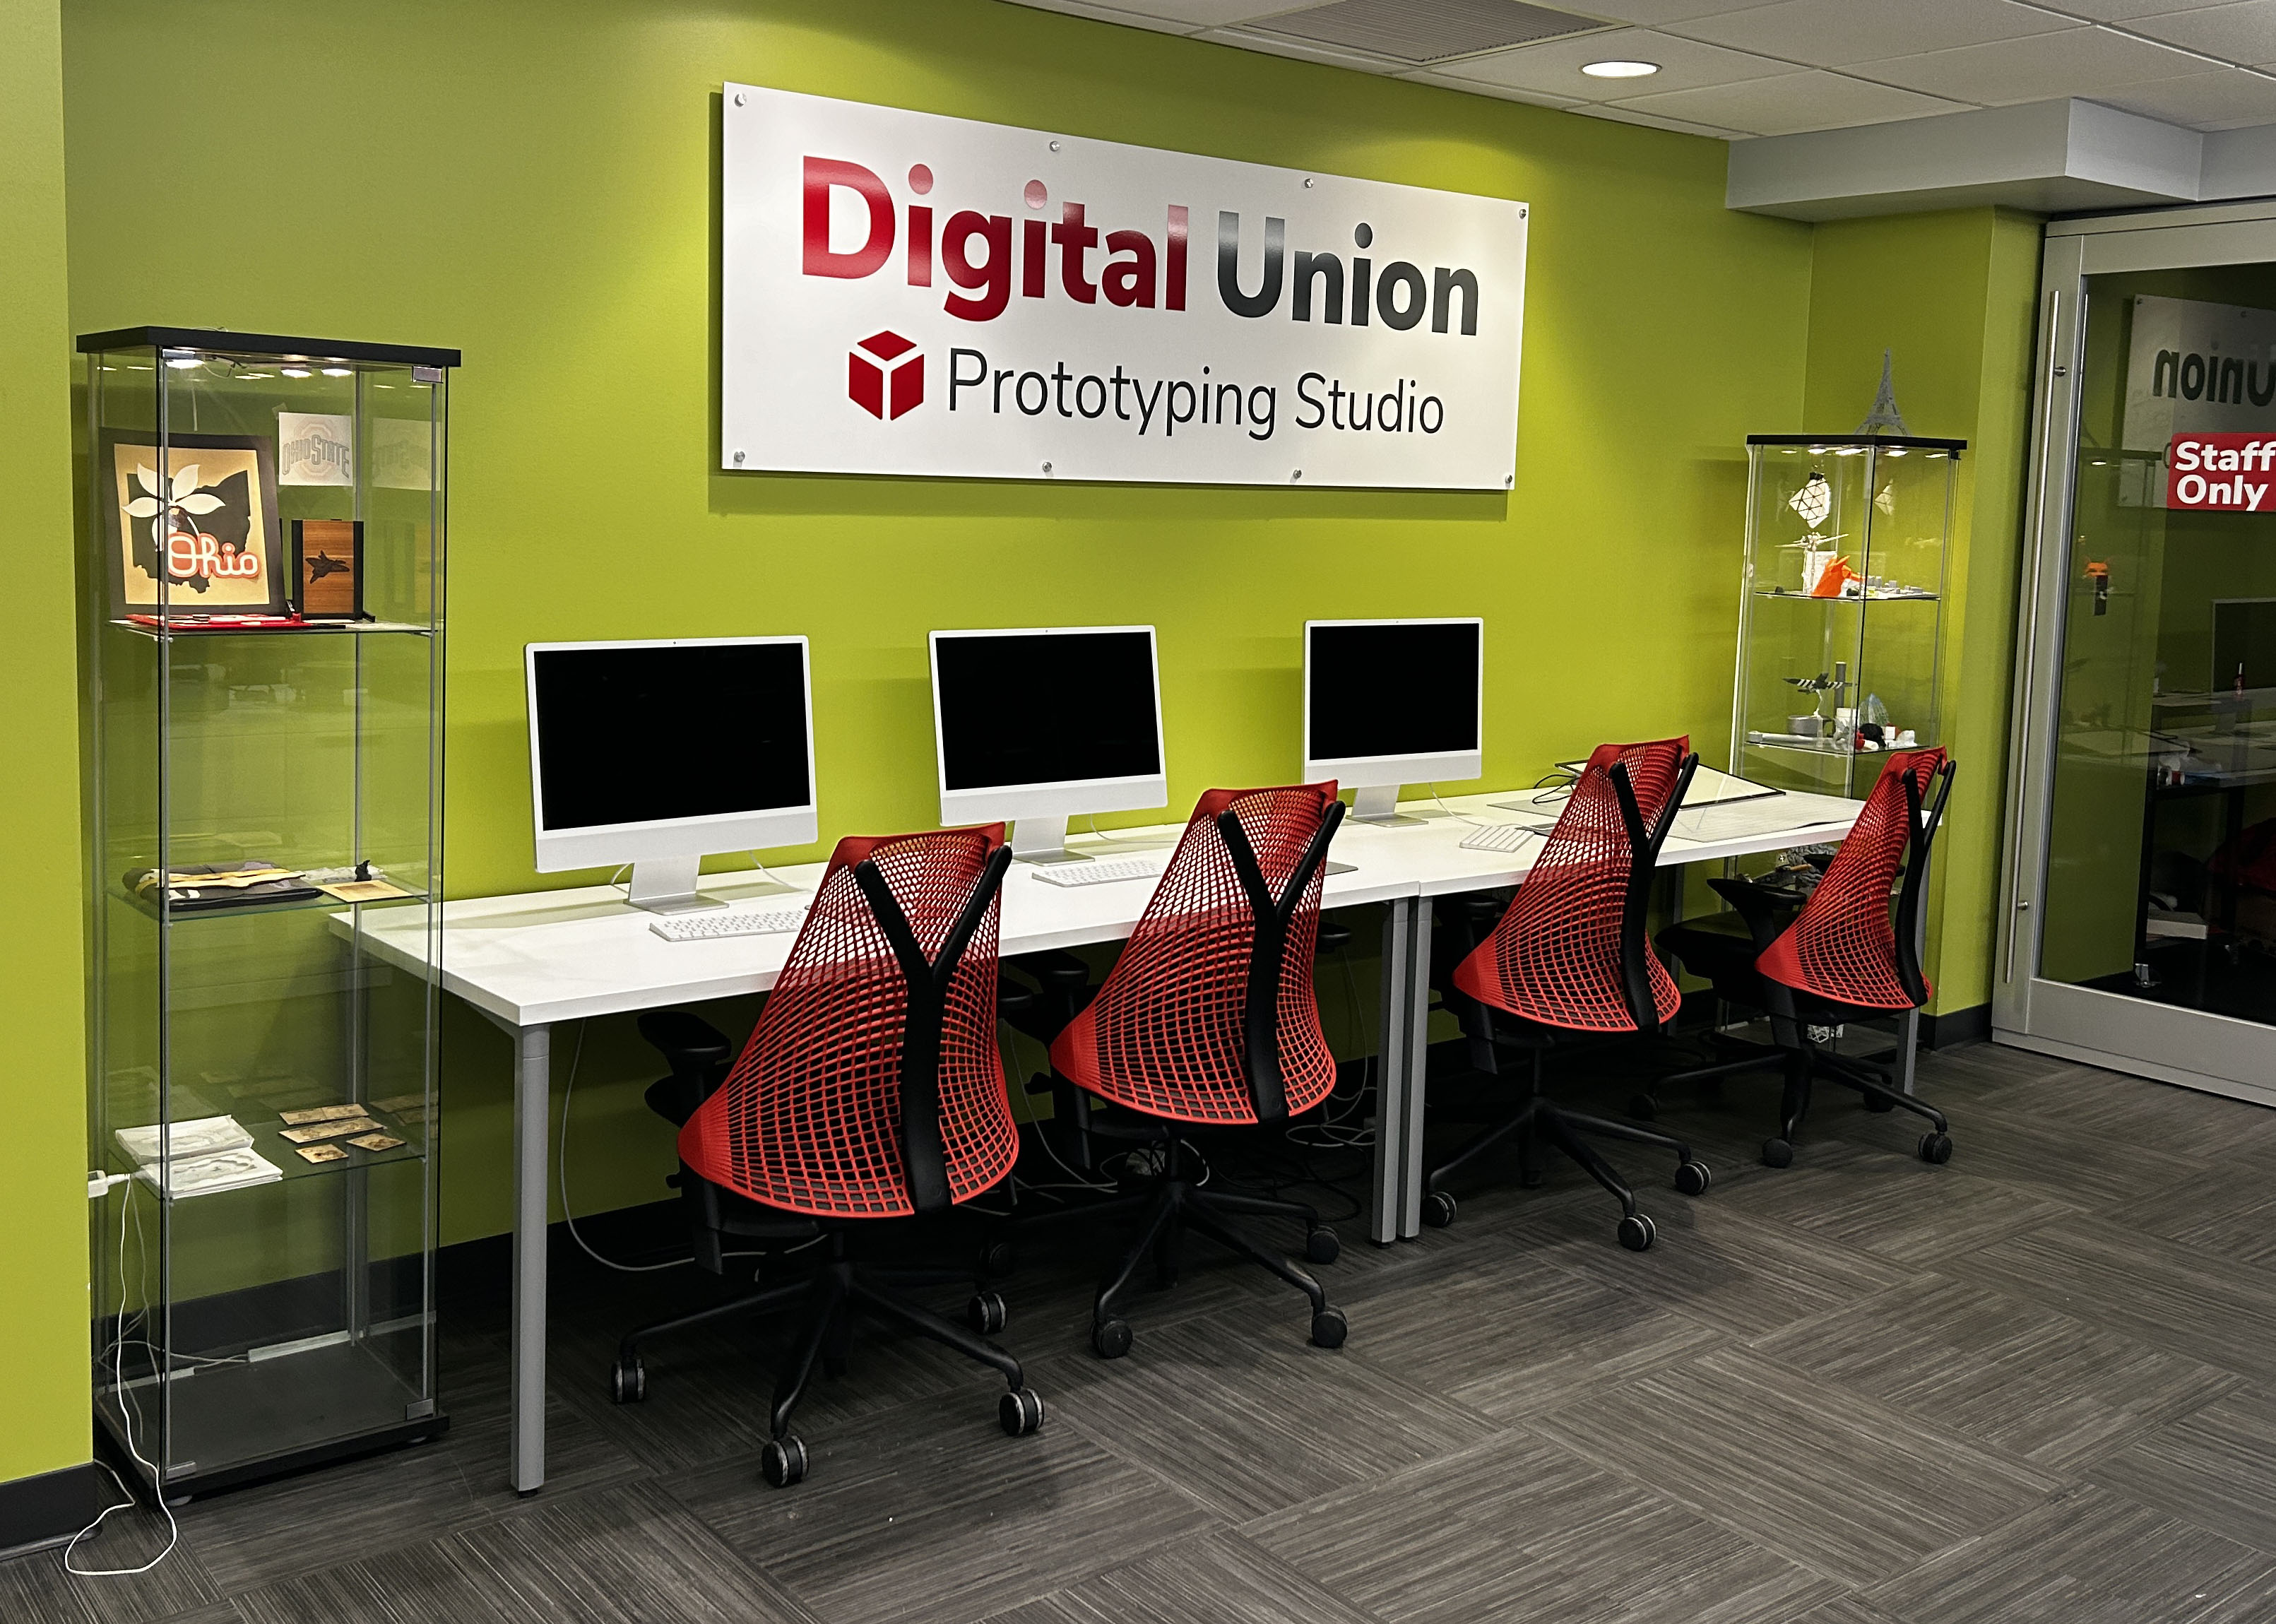 Digital Union: Prototyping Studio Computer wall